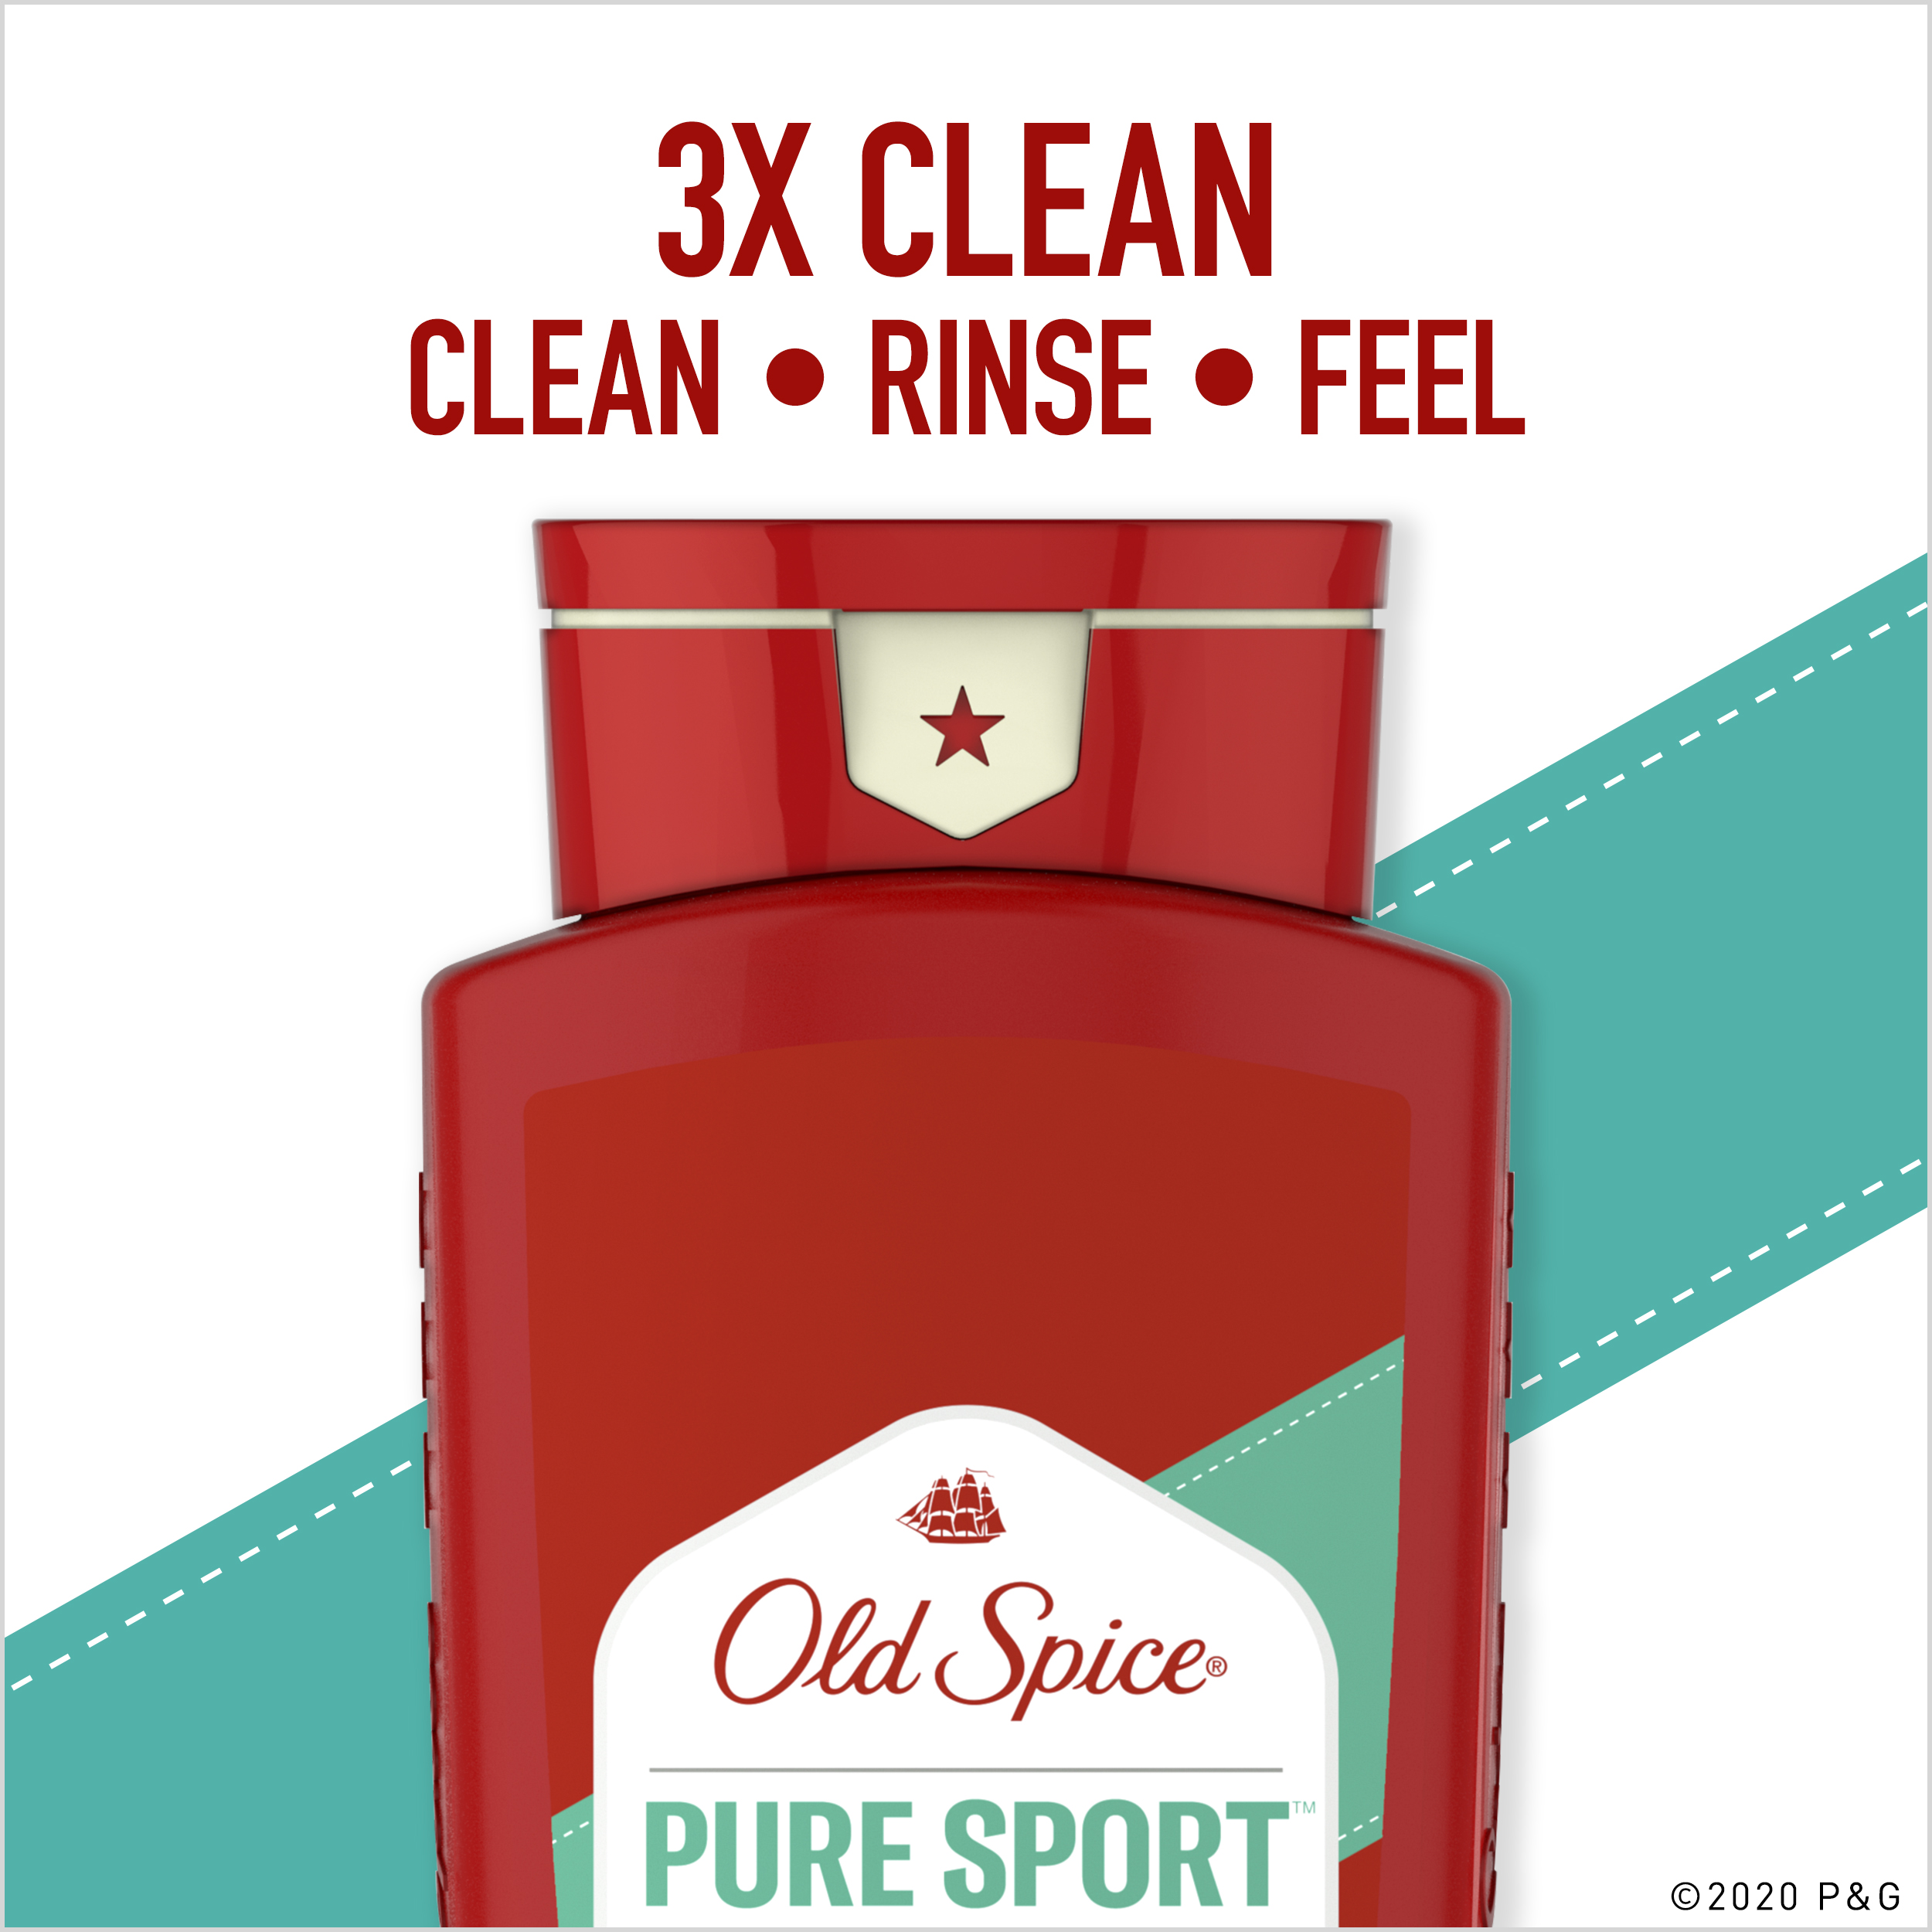 Old Spice High Endurance Body Wash for Men, Pure Sport Scent, 18 fl oz, 2 Pack - image 5 of 9